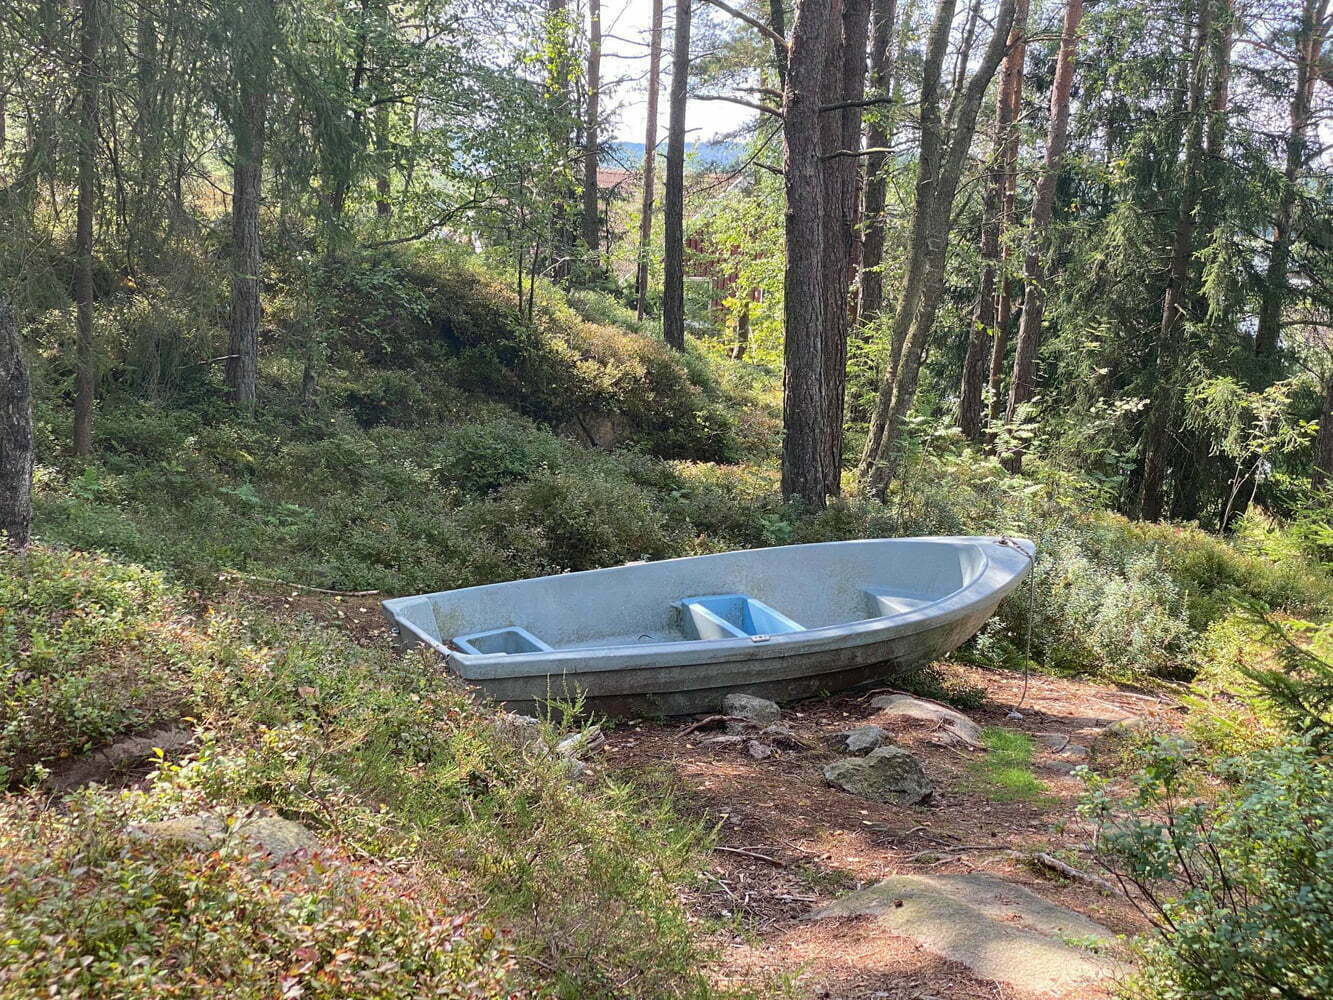 Bilde av en gammel robåt ved en sti i skogsområde